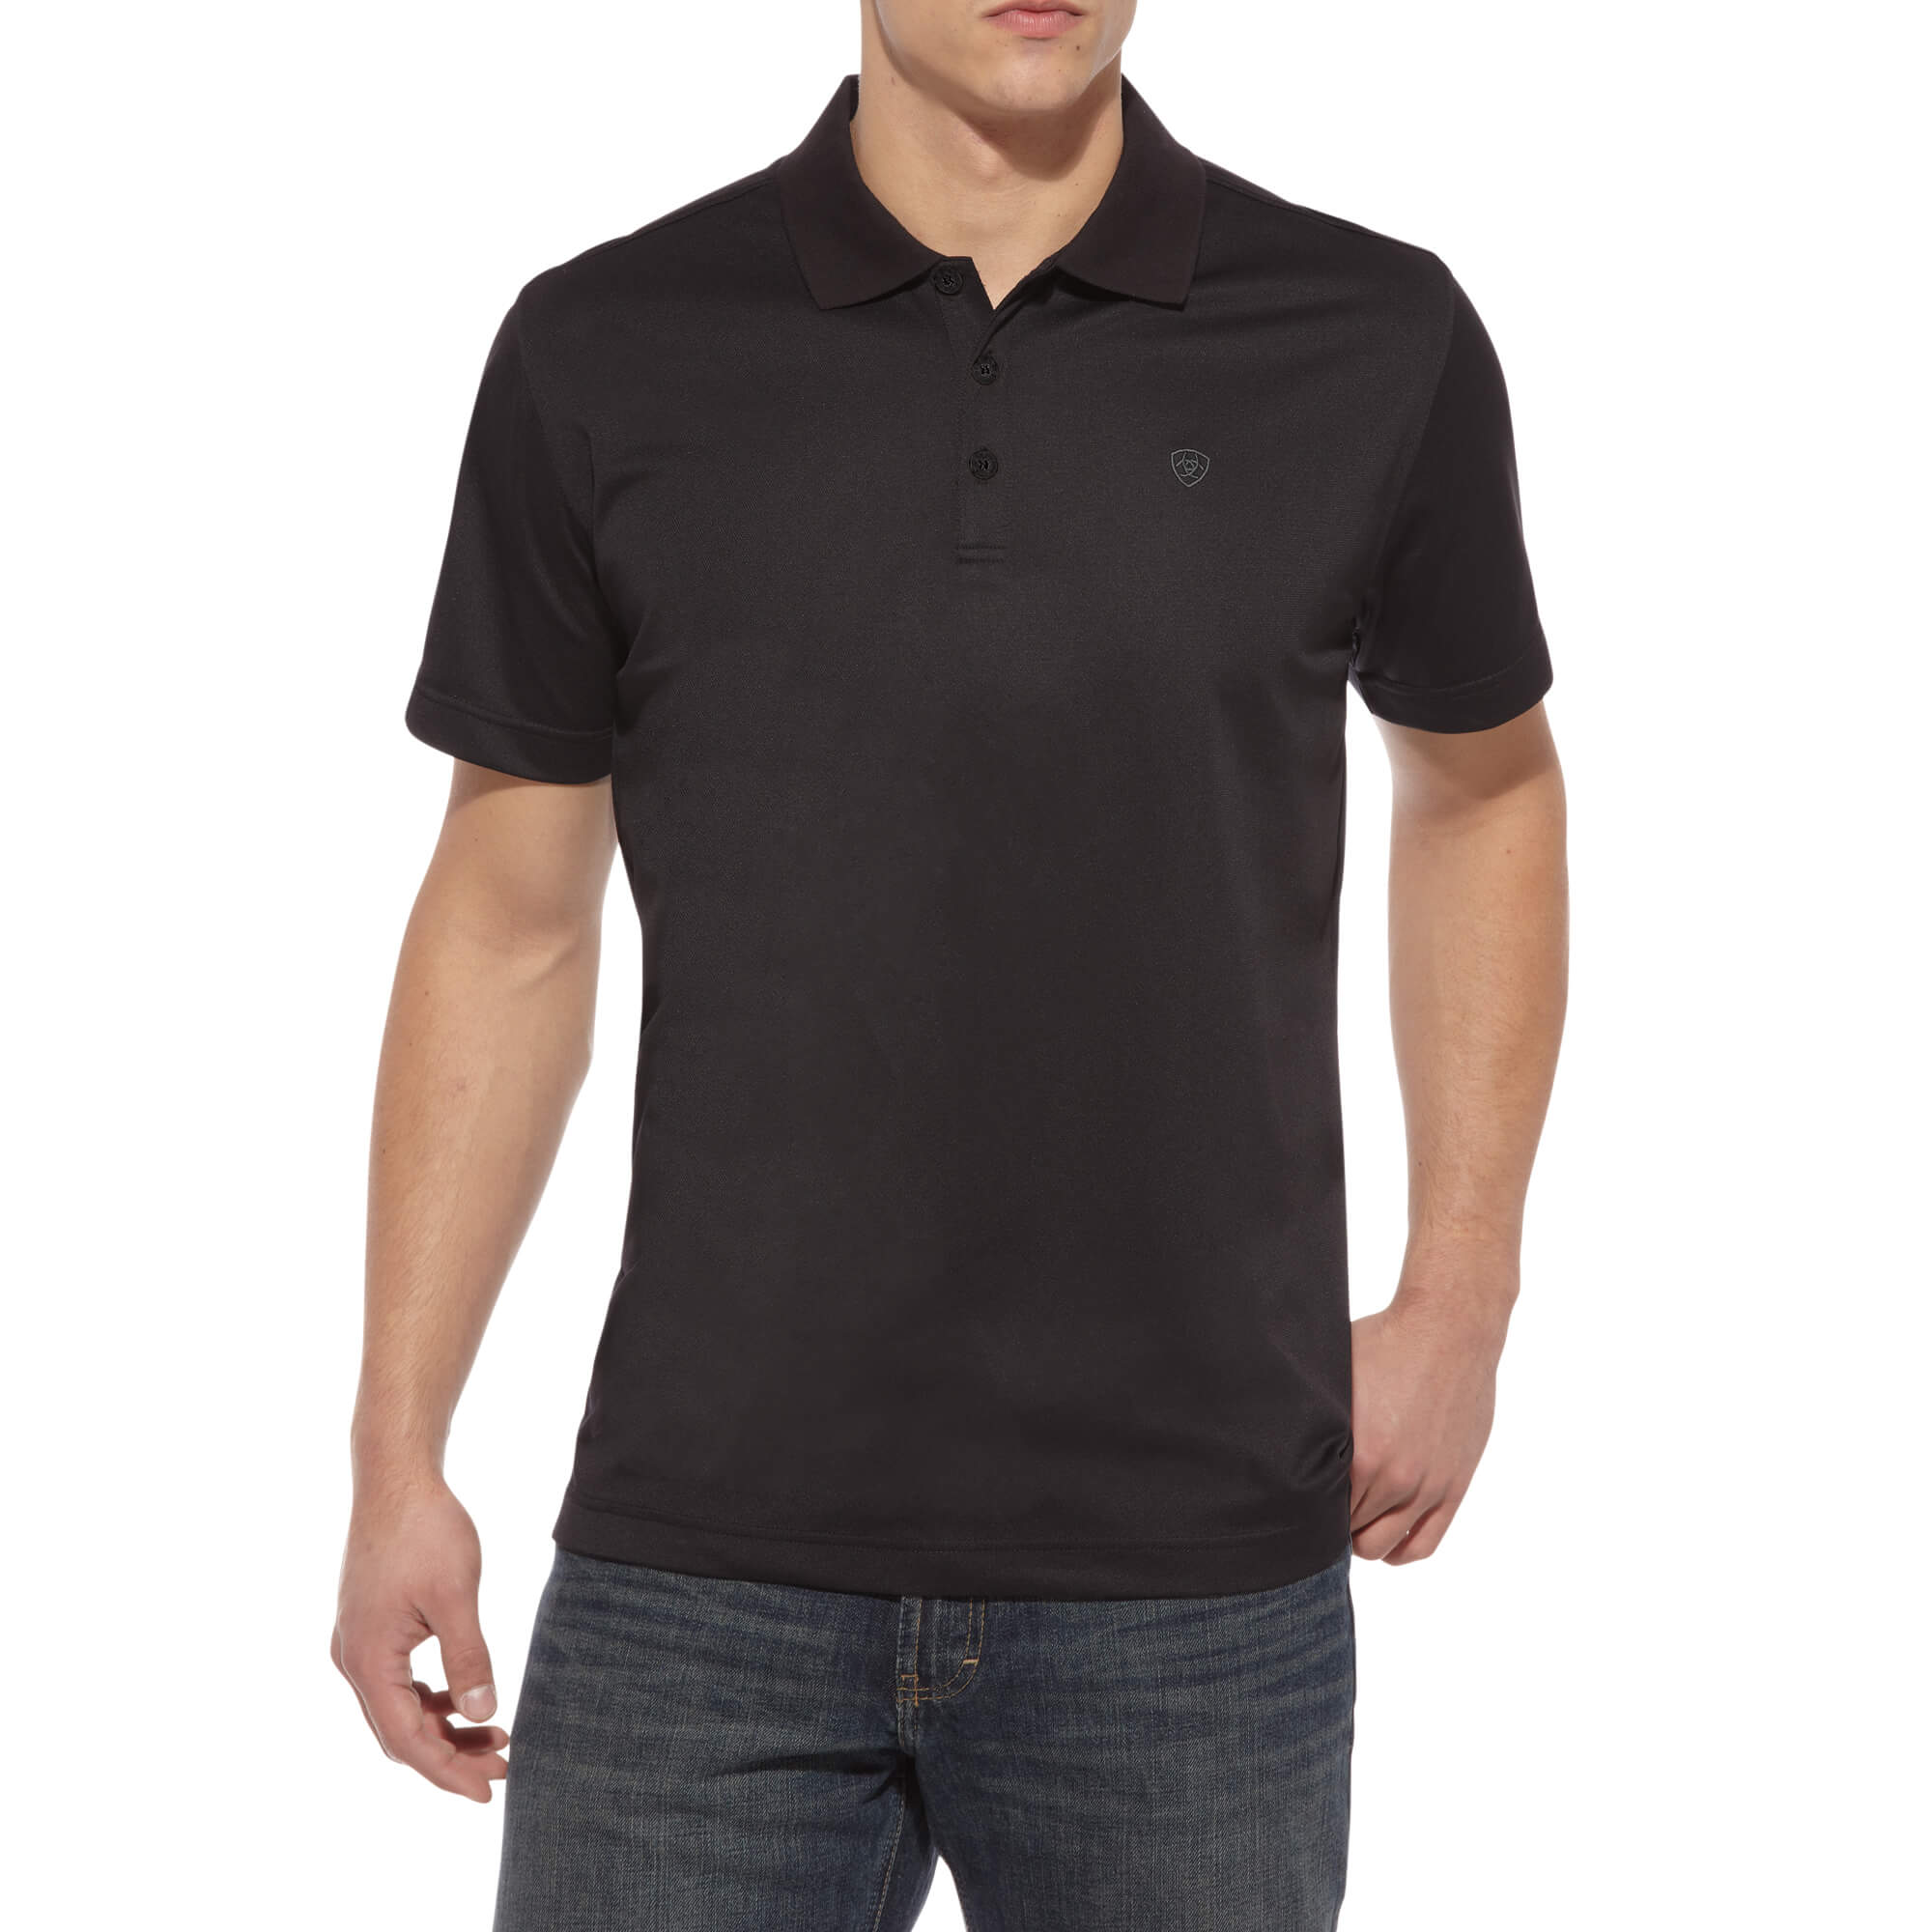 Men's TEK Polo Shirt in Black, Size: Medium by Ariat